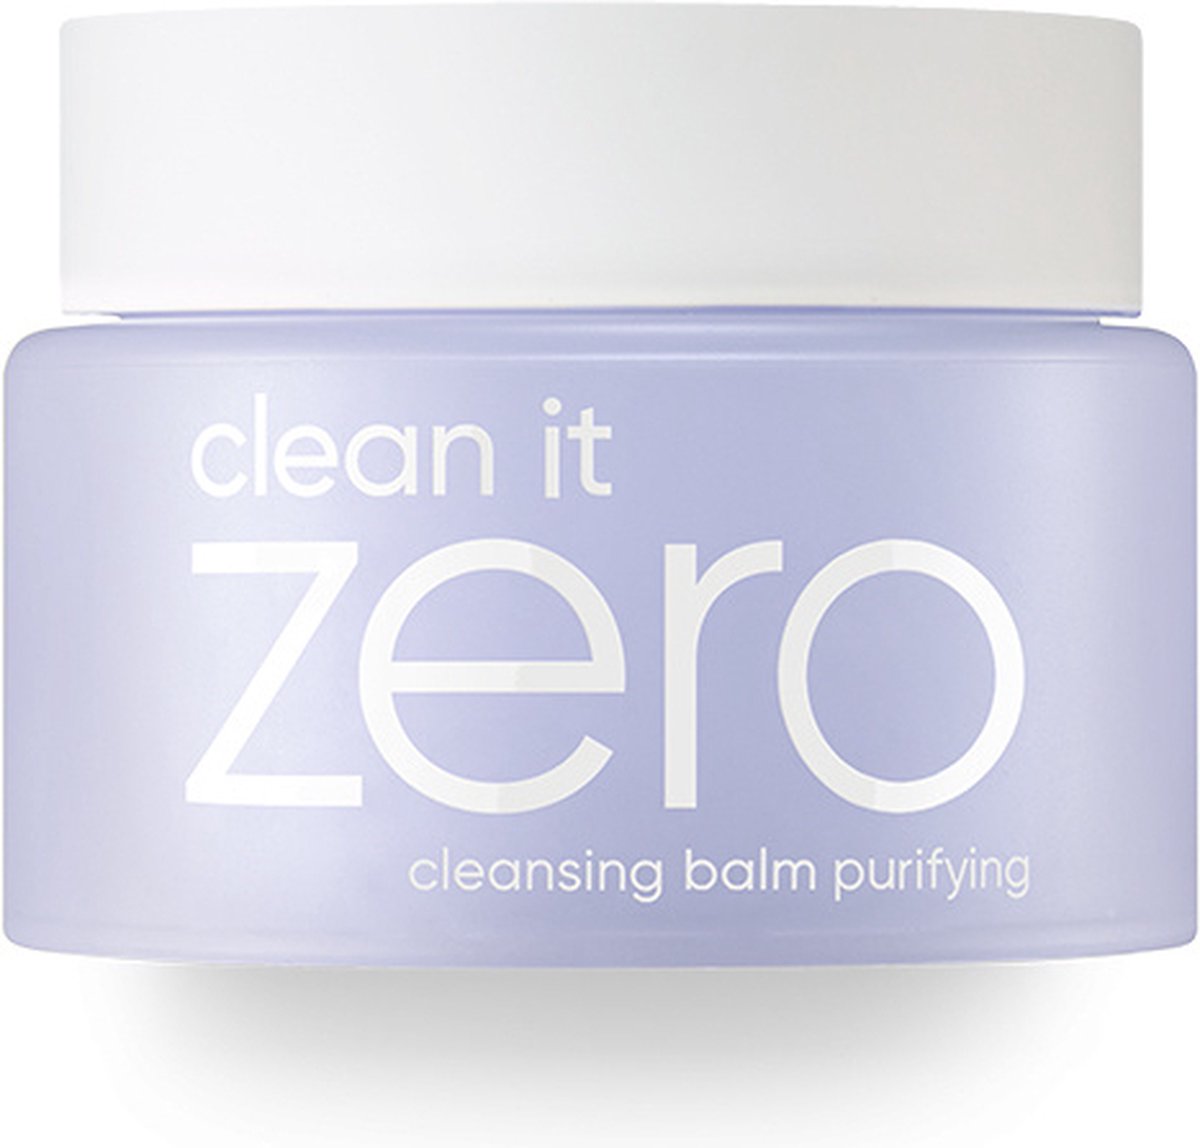 Banila Co - Clean it Zero Cleansing Balm Purifying - 100ml - Gezichtsreiniging